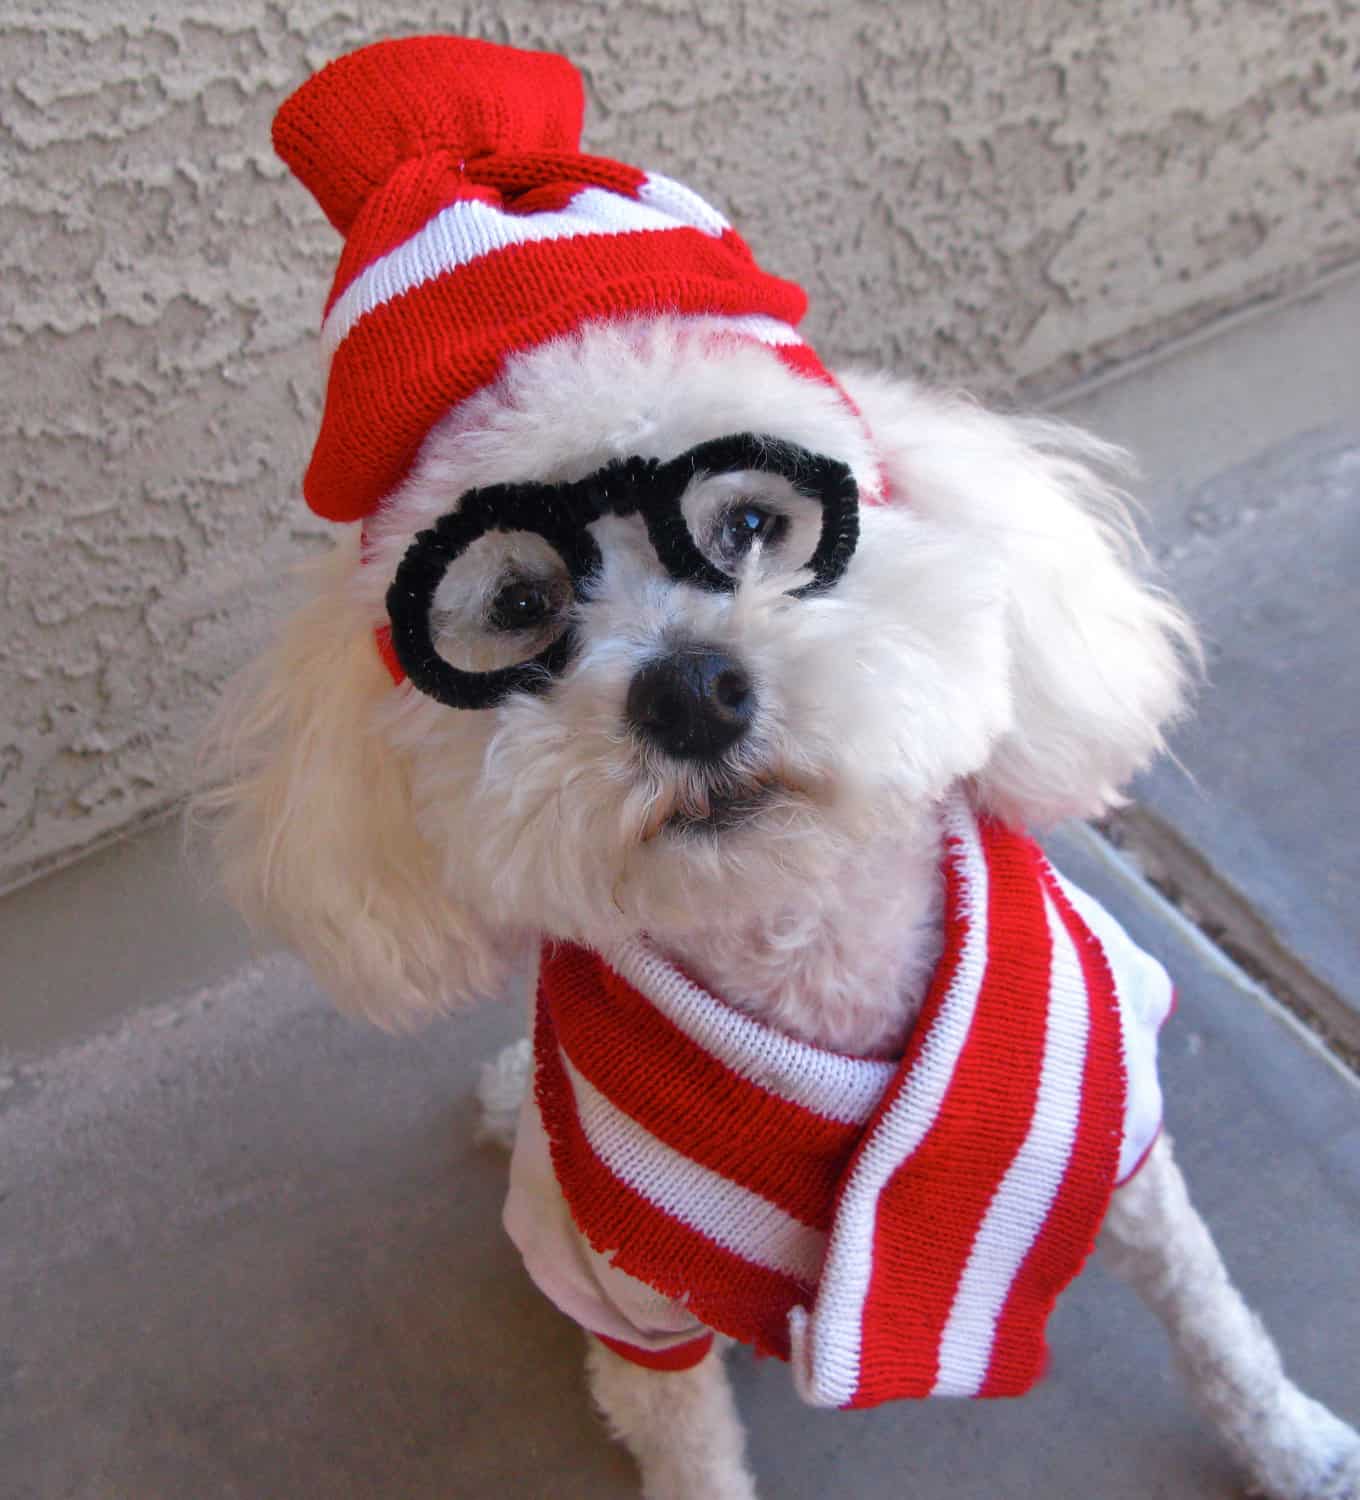 Where's Waldo Dog - Easy Dog Costume